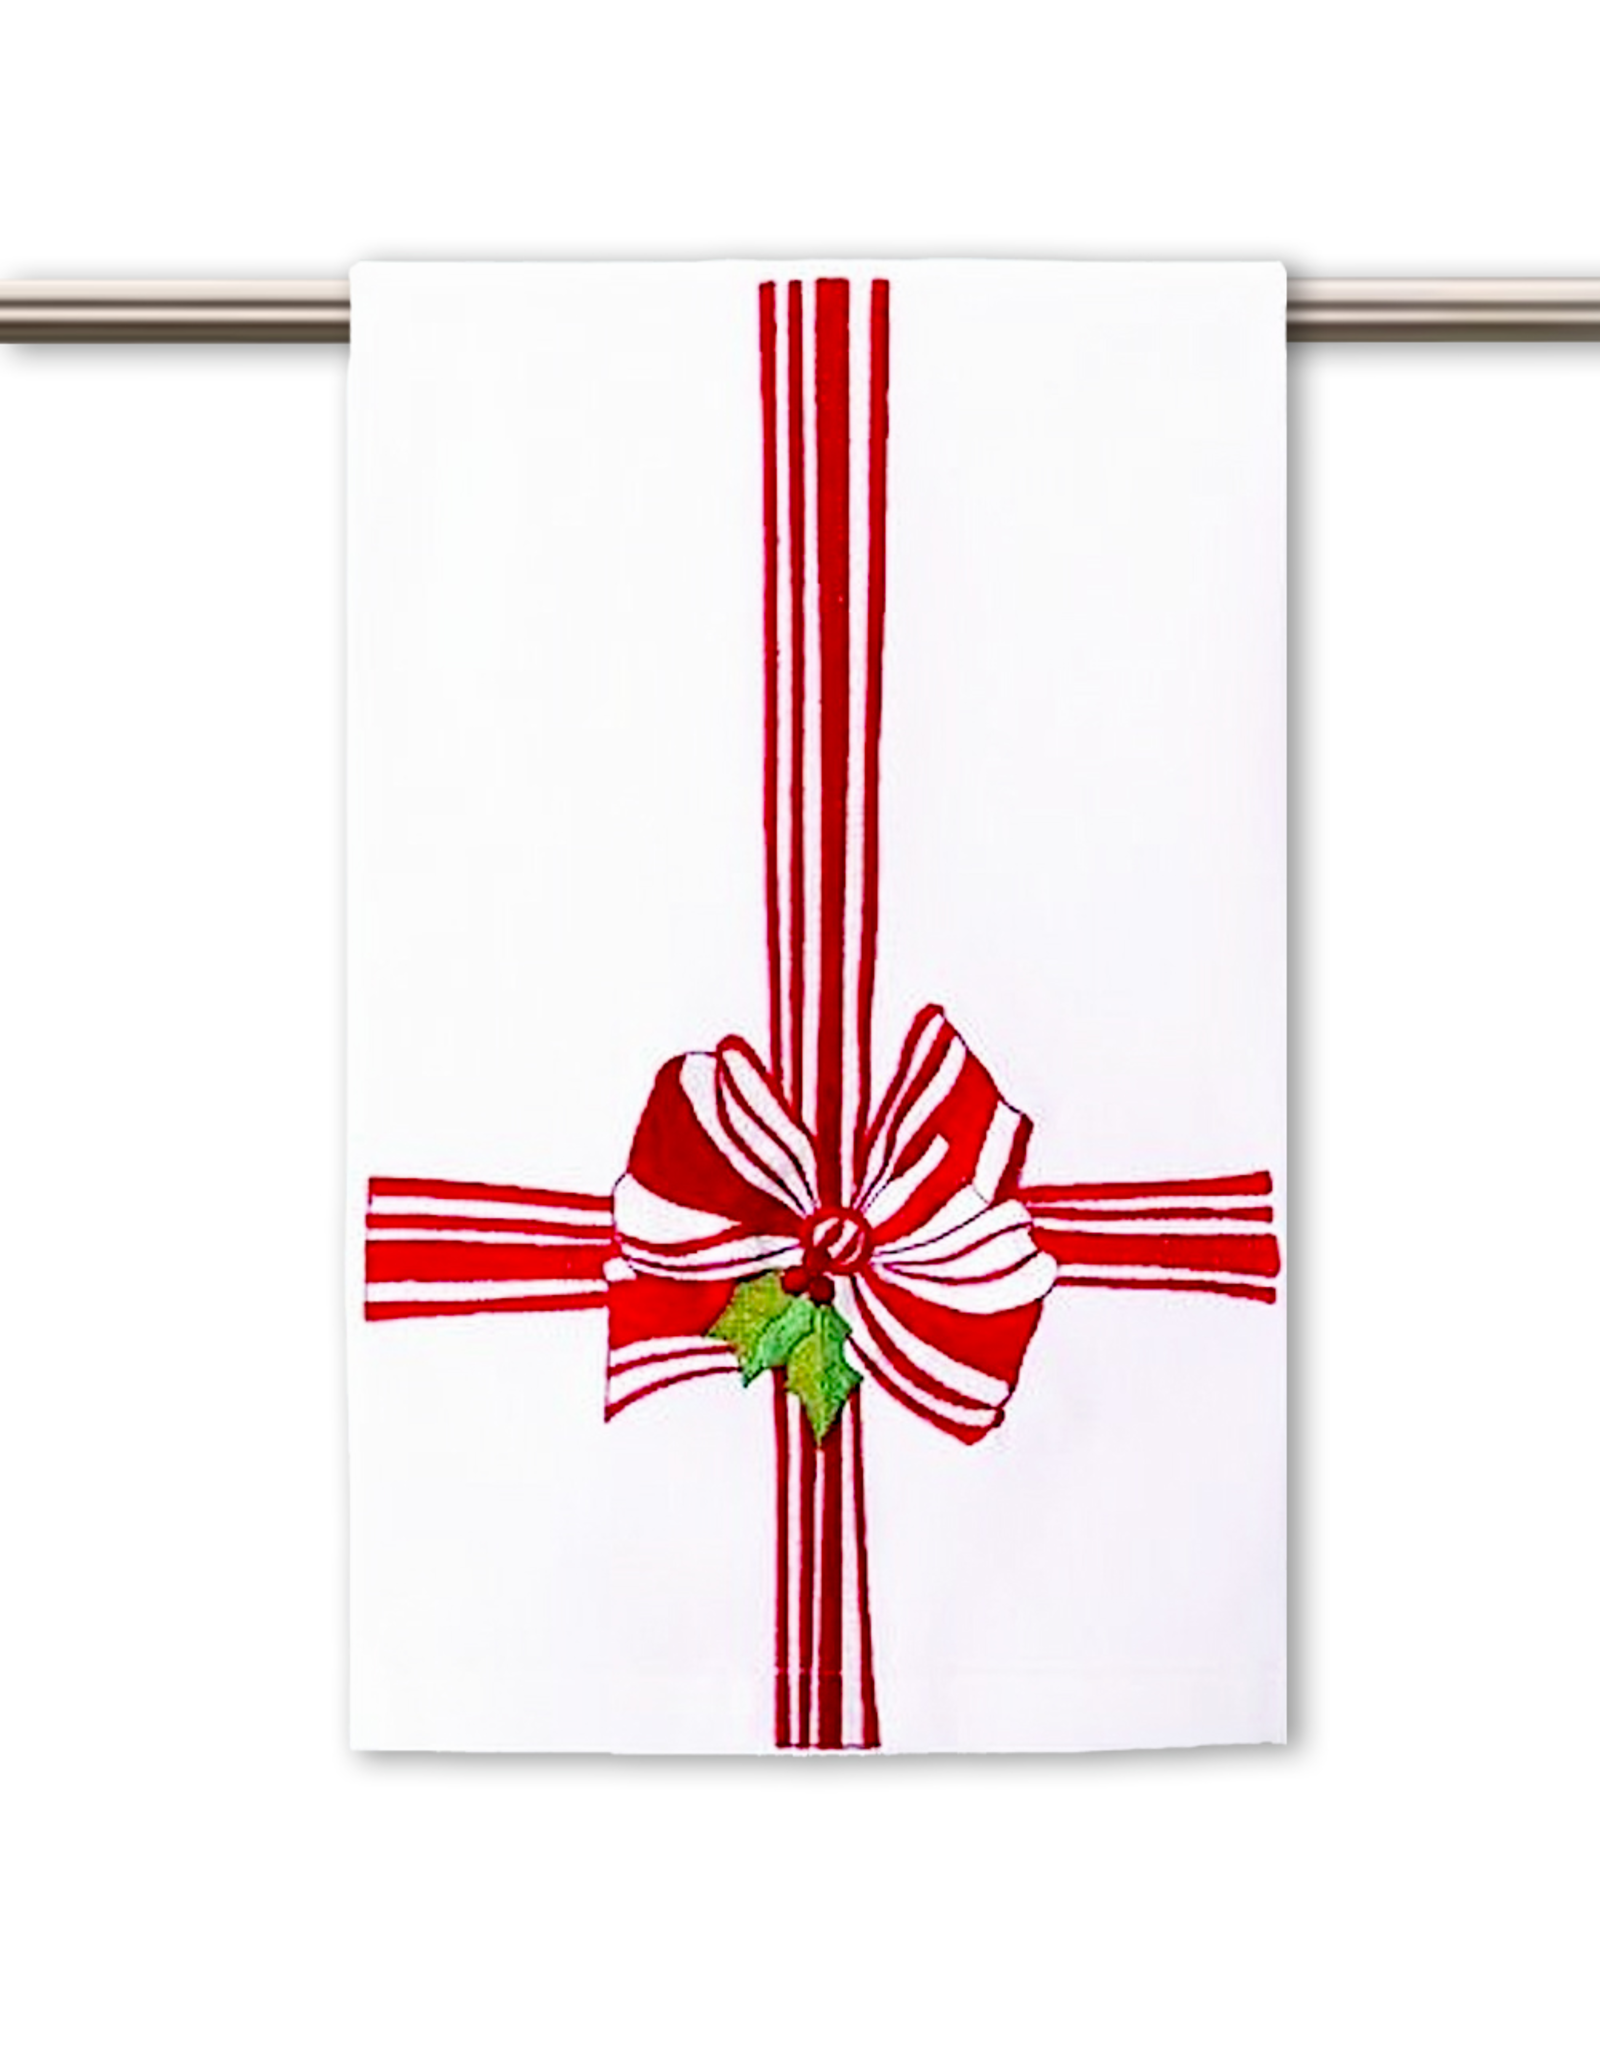 Peking Handicraft Christmas Hand-Guest Towel Red Ribbon Bow 16x25